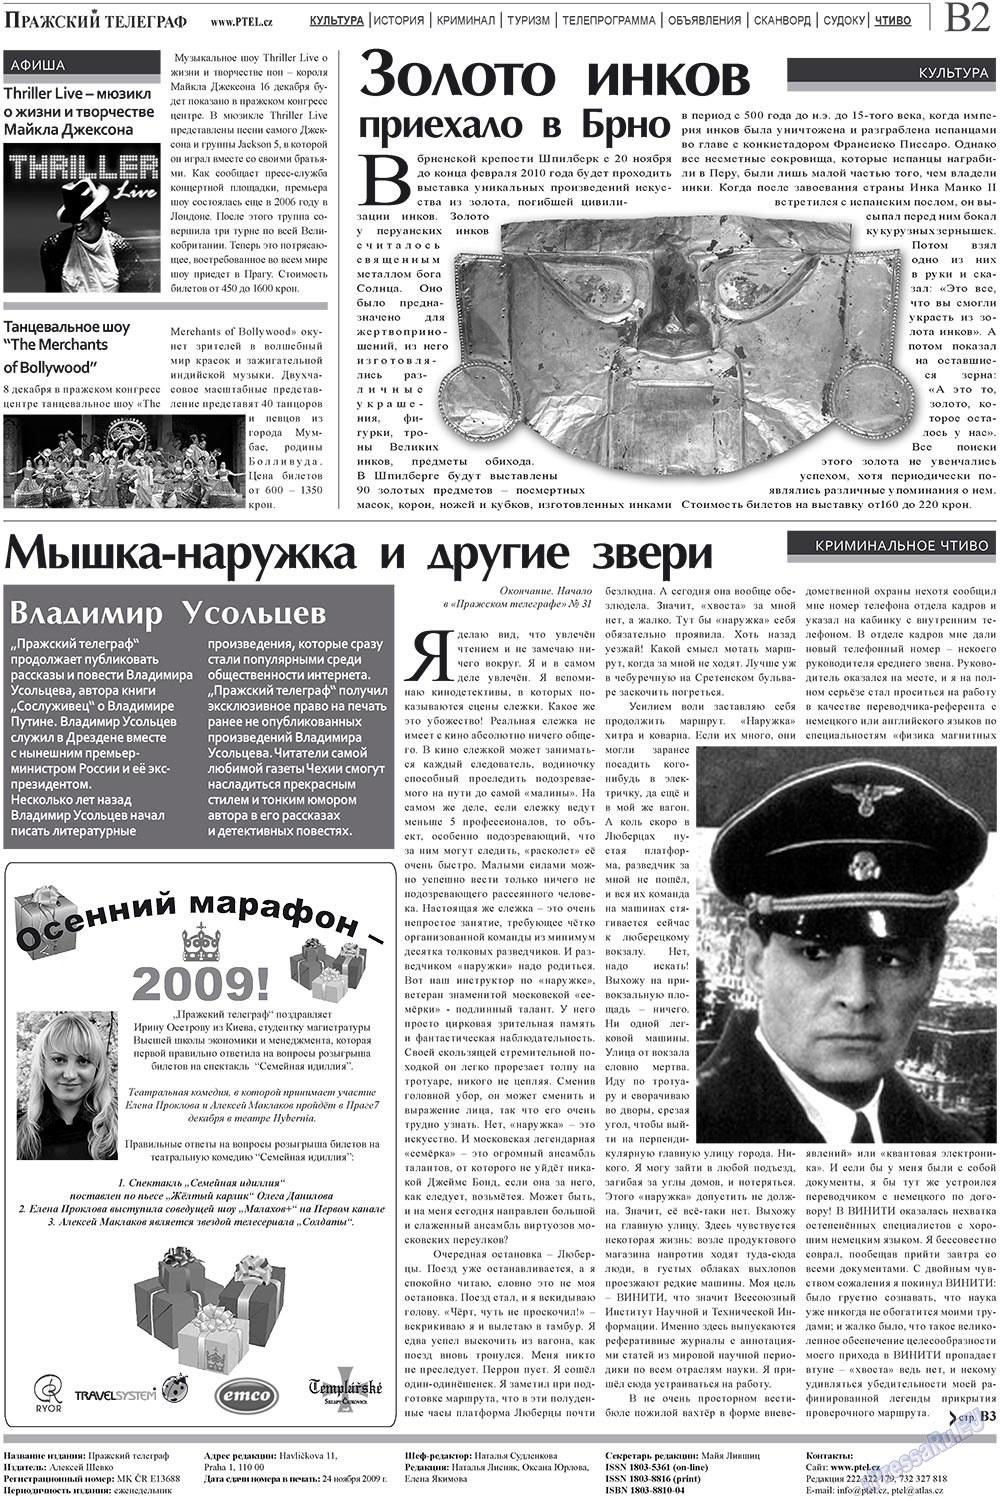 Пражский телеграф, газета. 2009 №32 стр.10